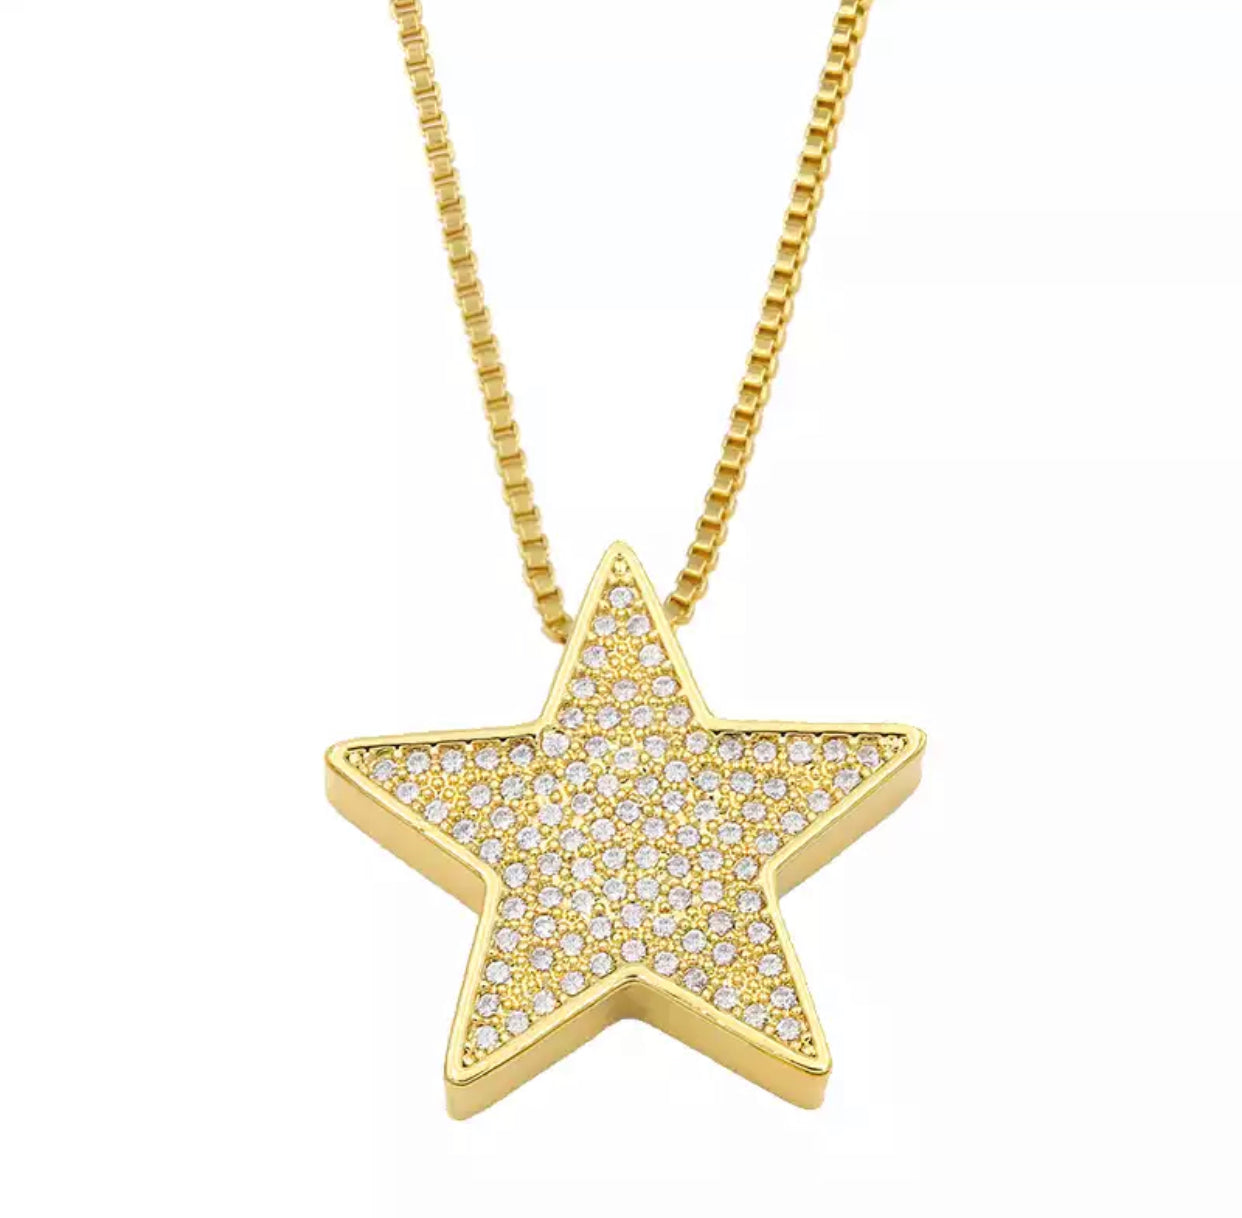 Erika Williner Designs - Atacama Gold Star Necklace